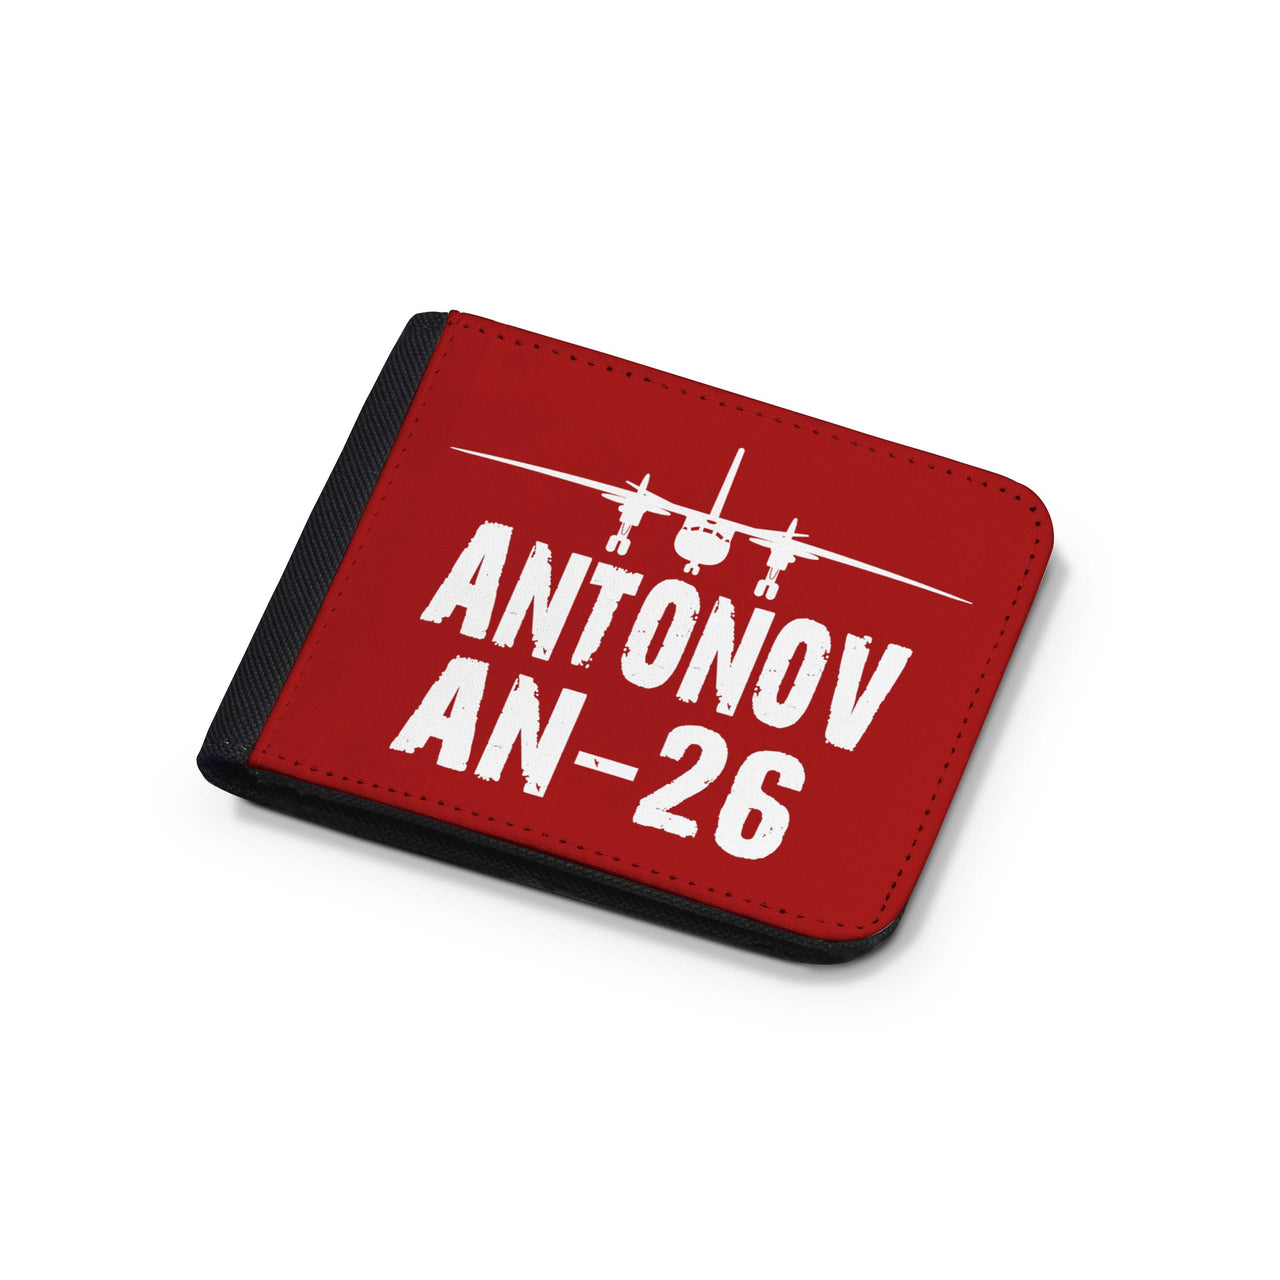 Antonov AN-26 & Plane Designed Wallets